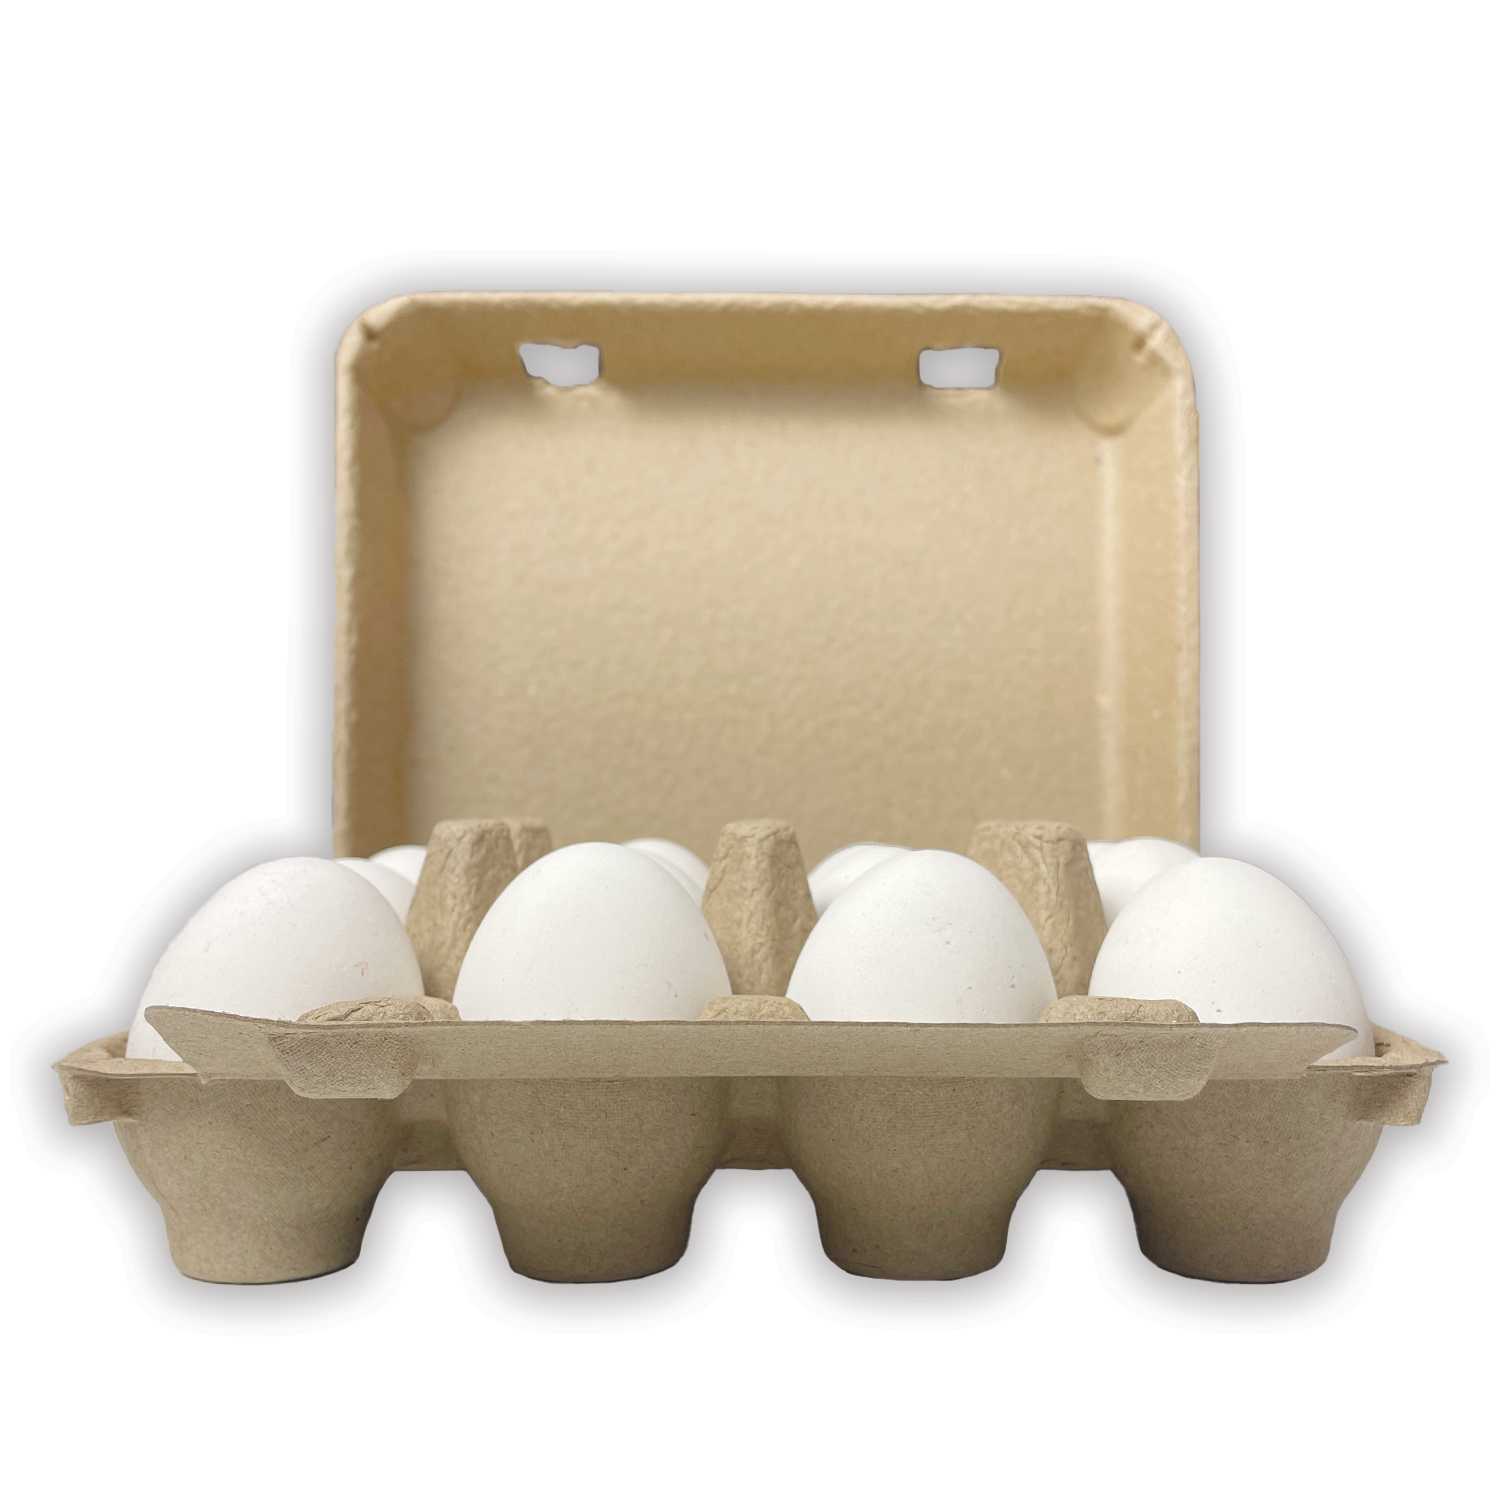 Ruralty Recycled Cardboard Egg Cartons 200ct Dozen 4x3 Vintage Bulk Egg Cartons, Size: 200 Pack